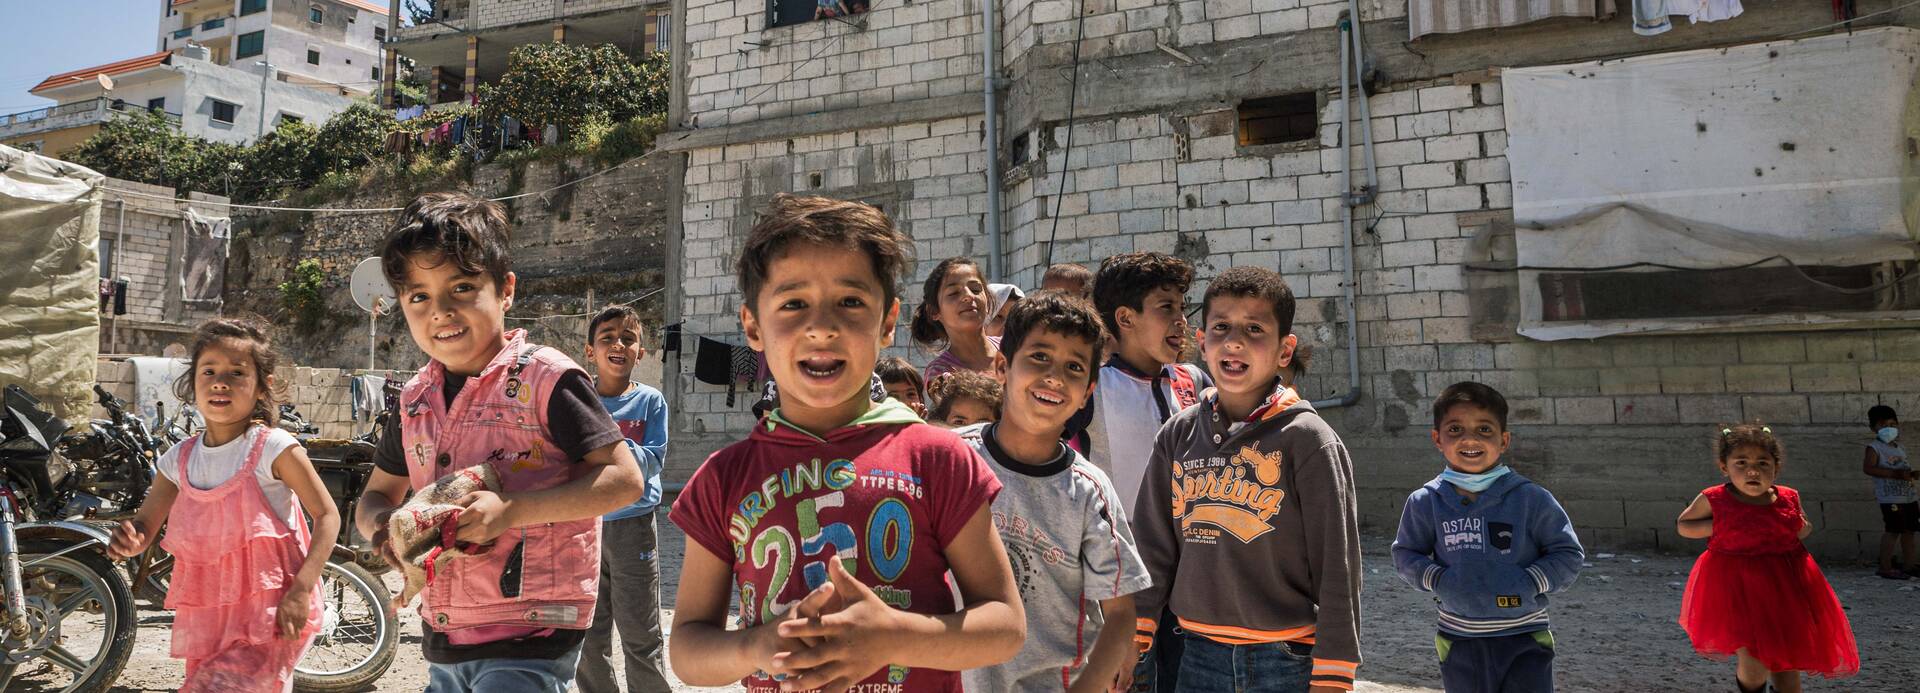 Kinder im Libanon